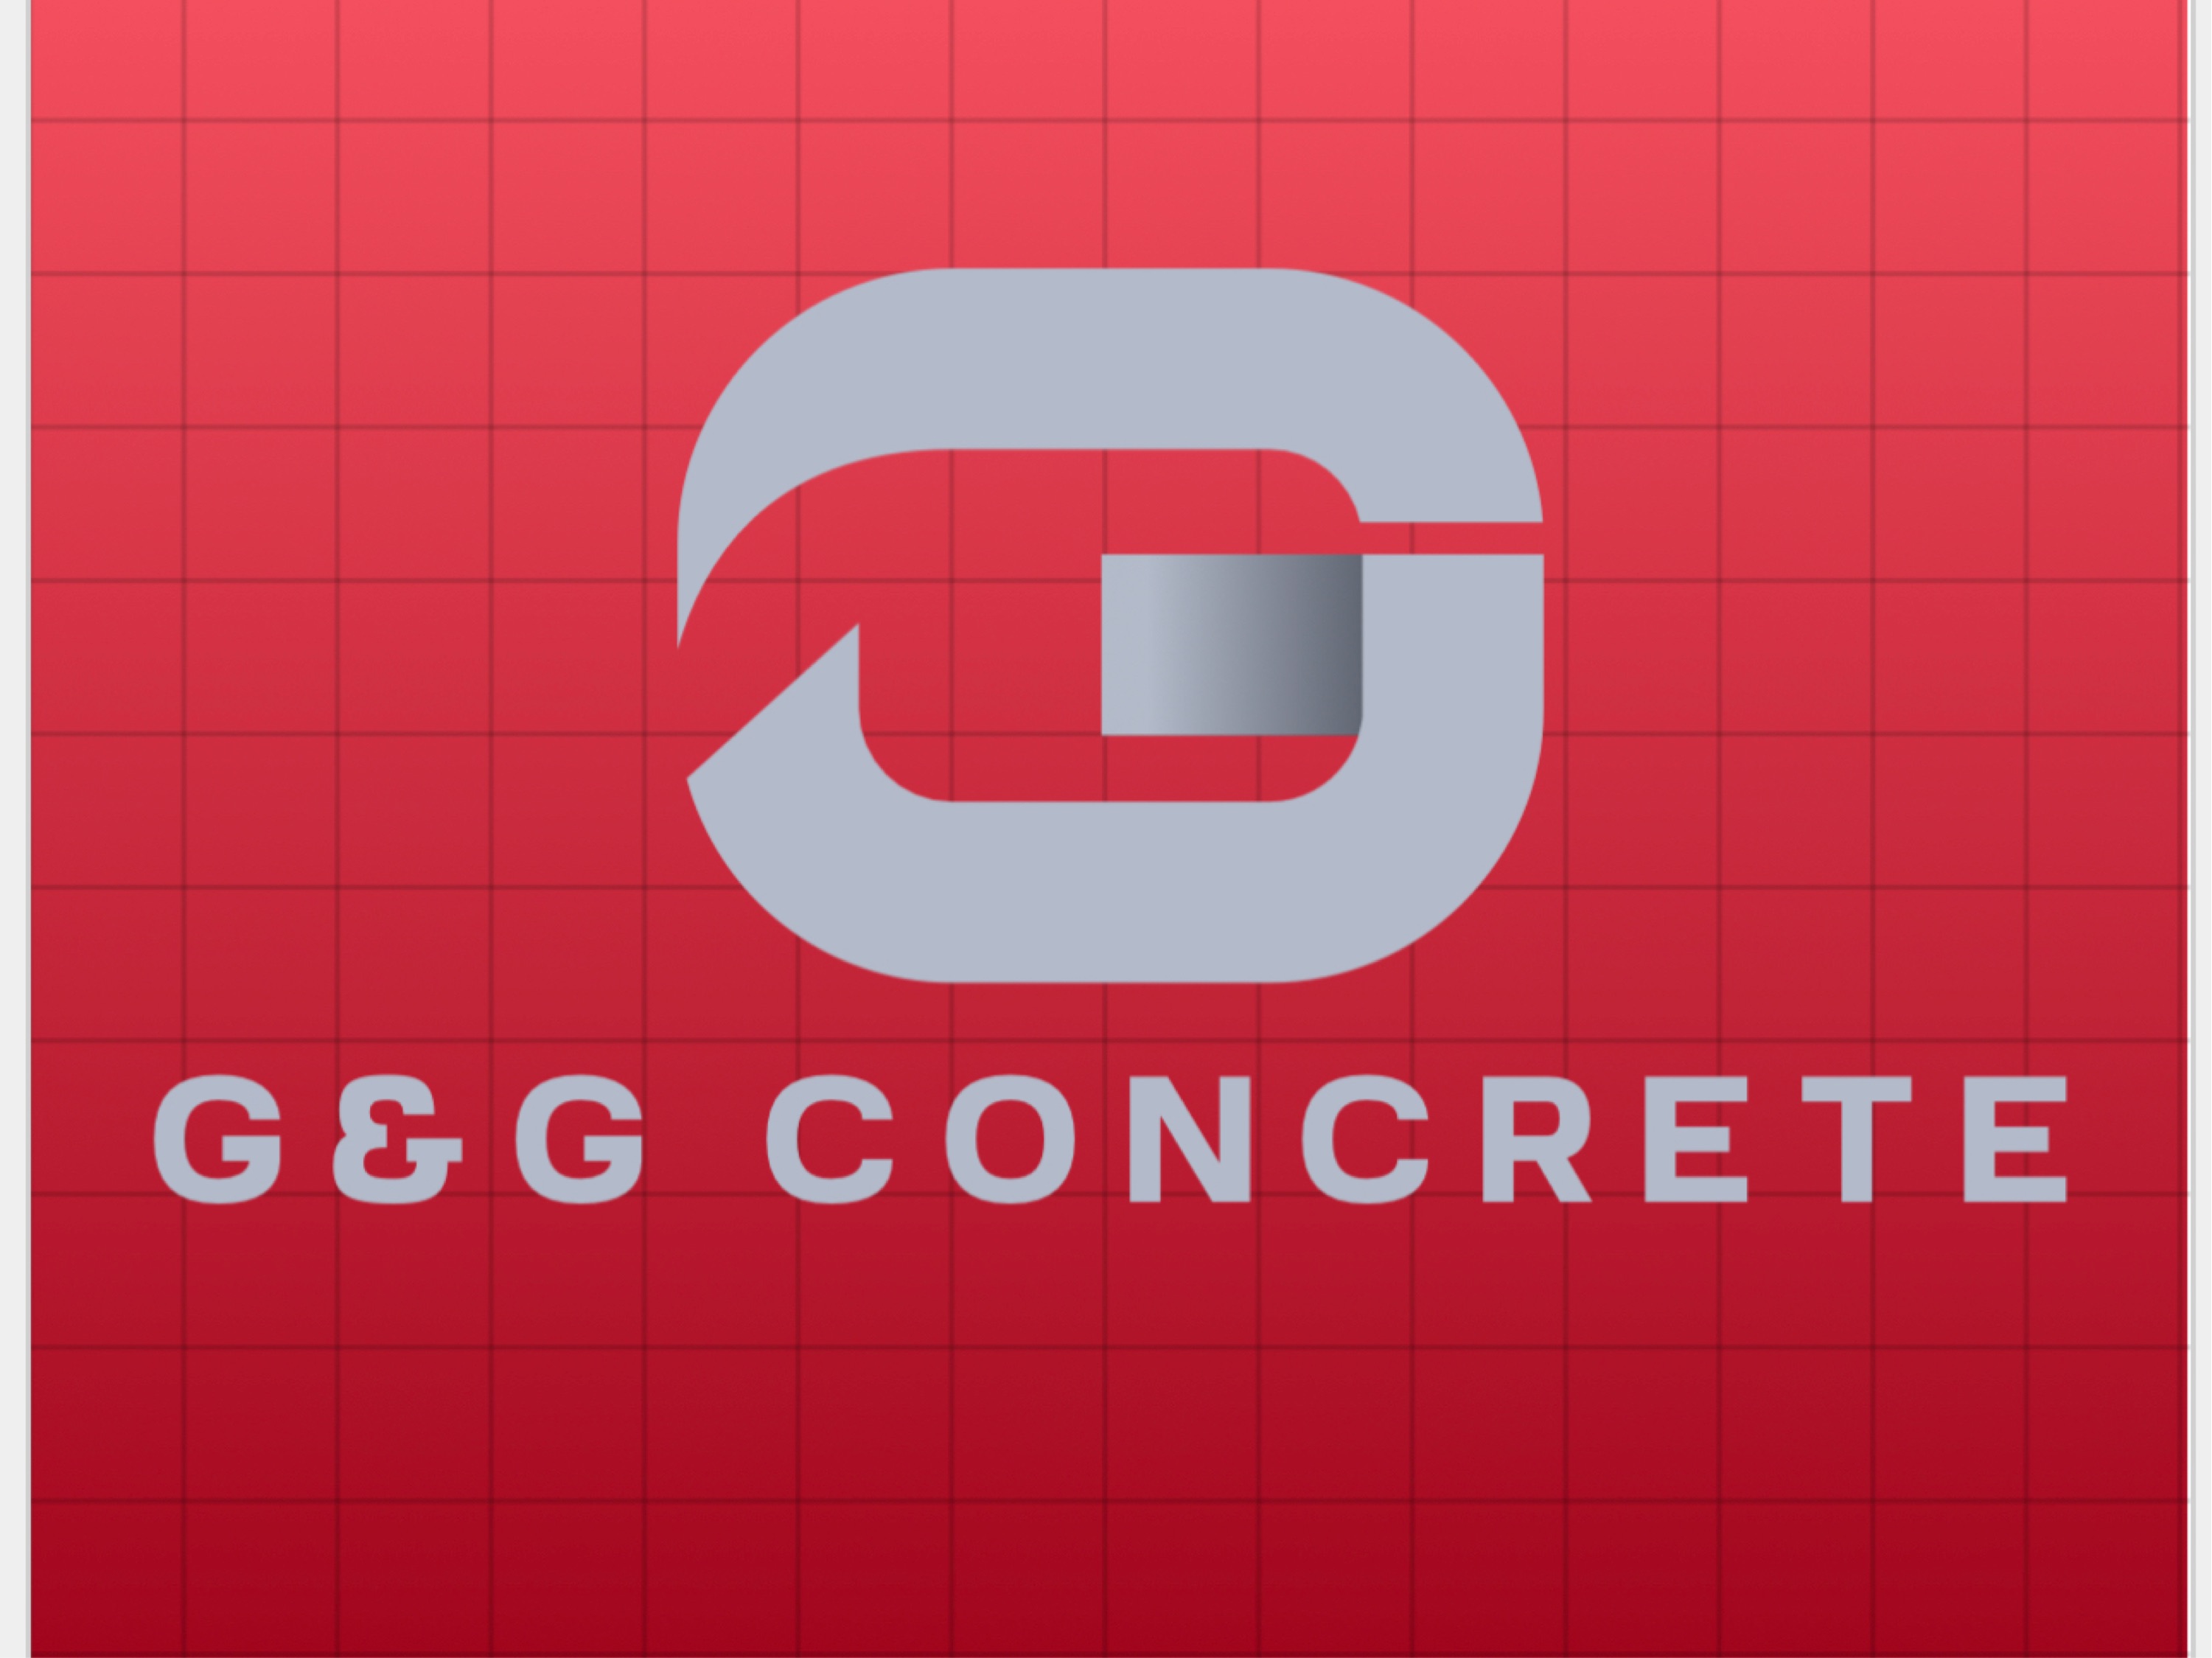 GG Zavaleta Concrete Logo